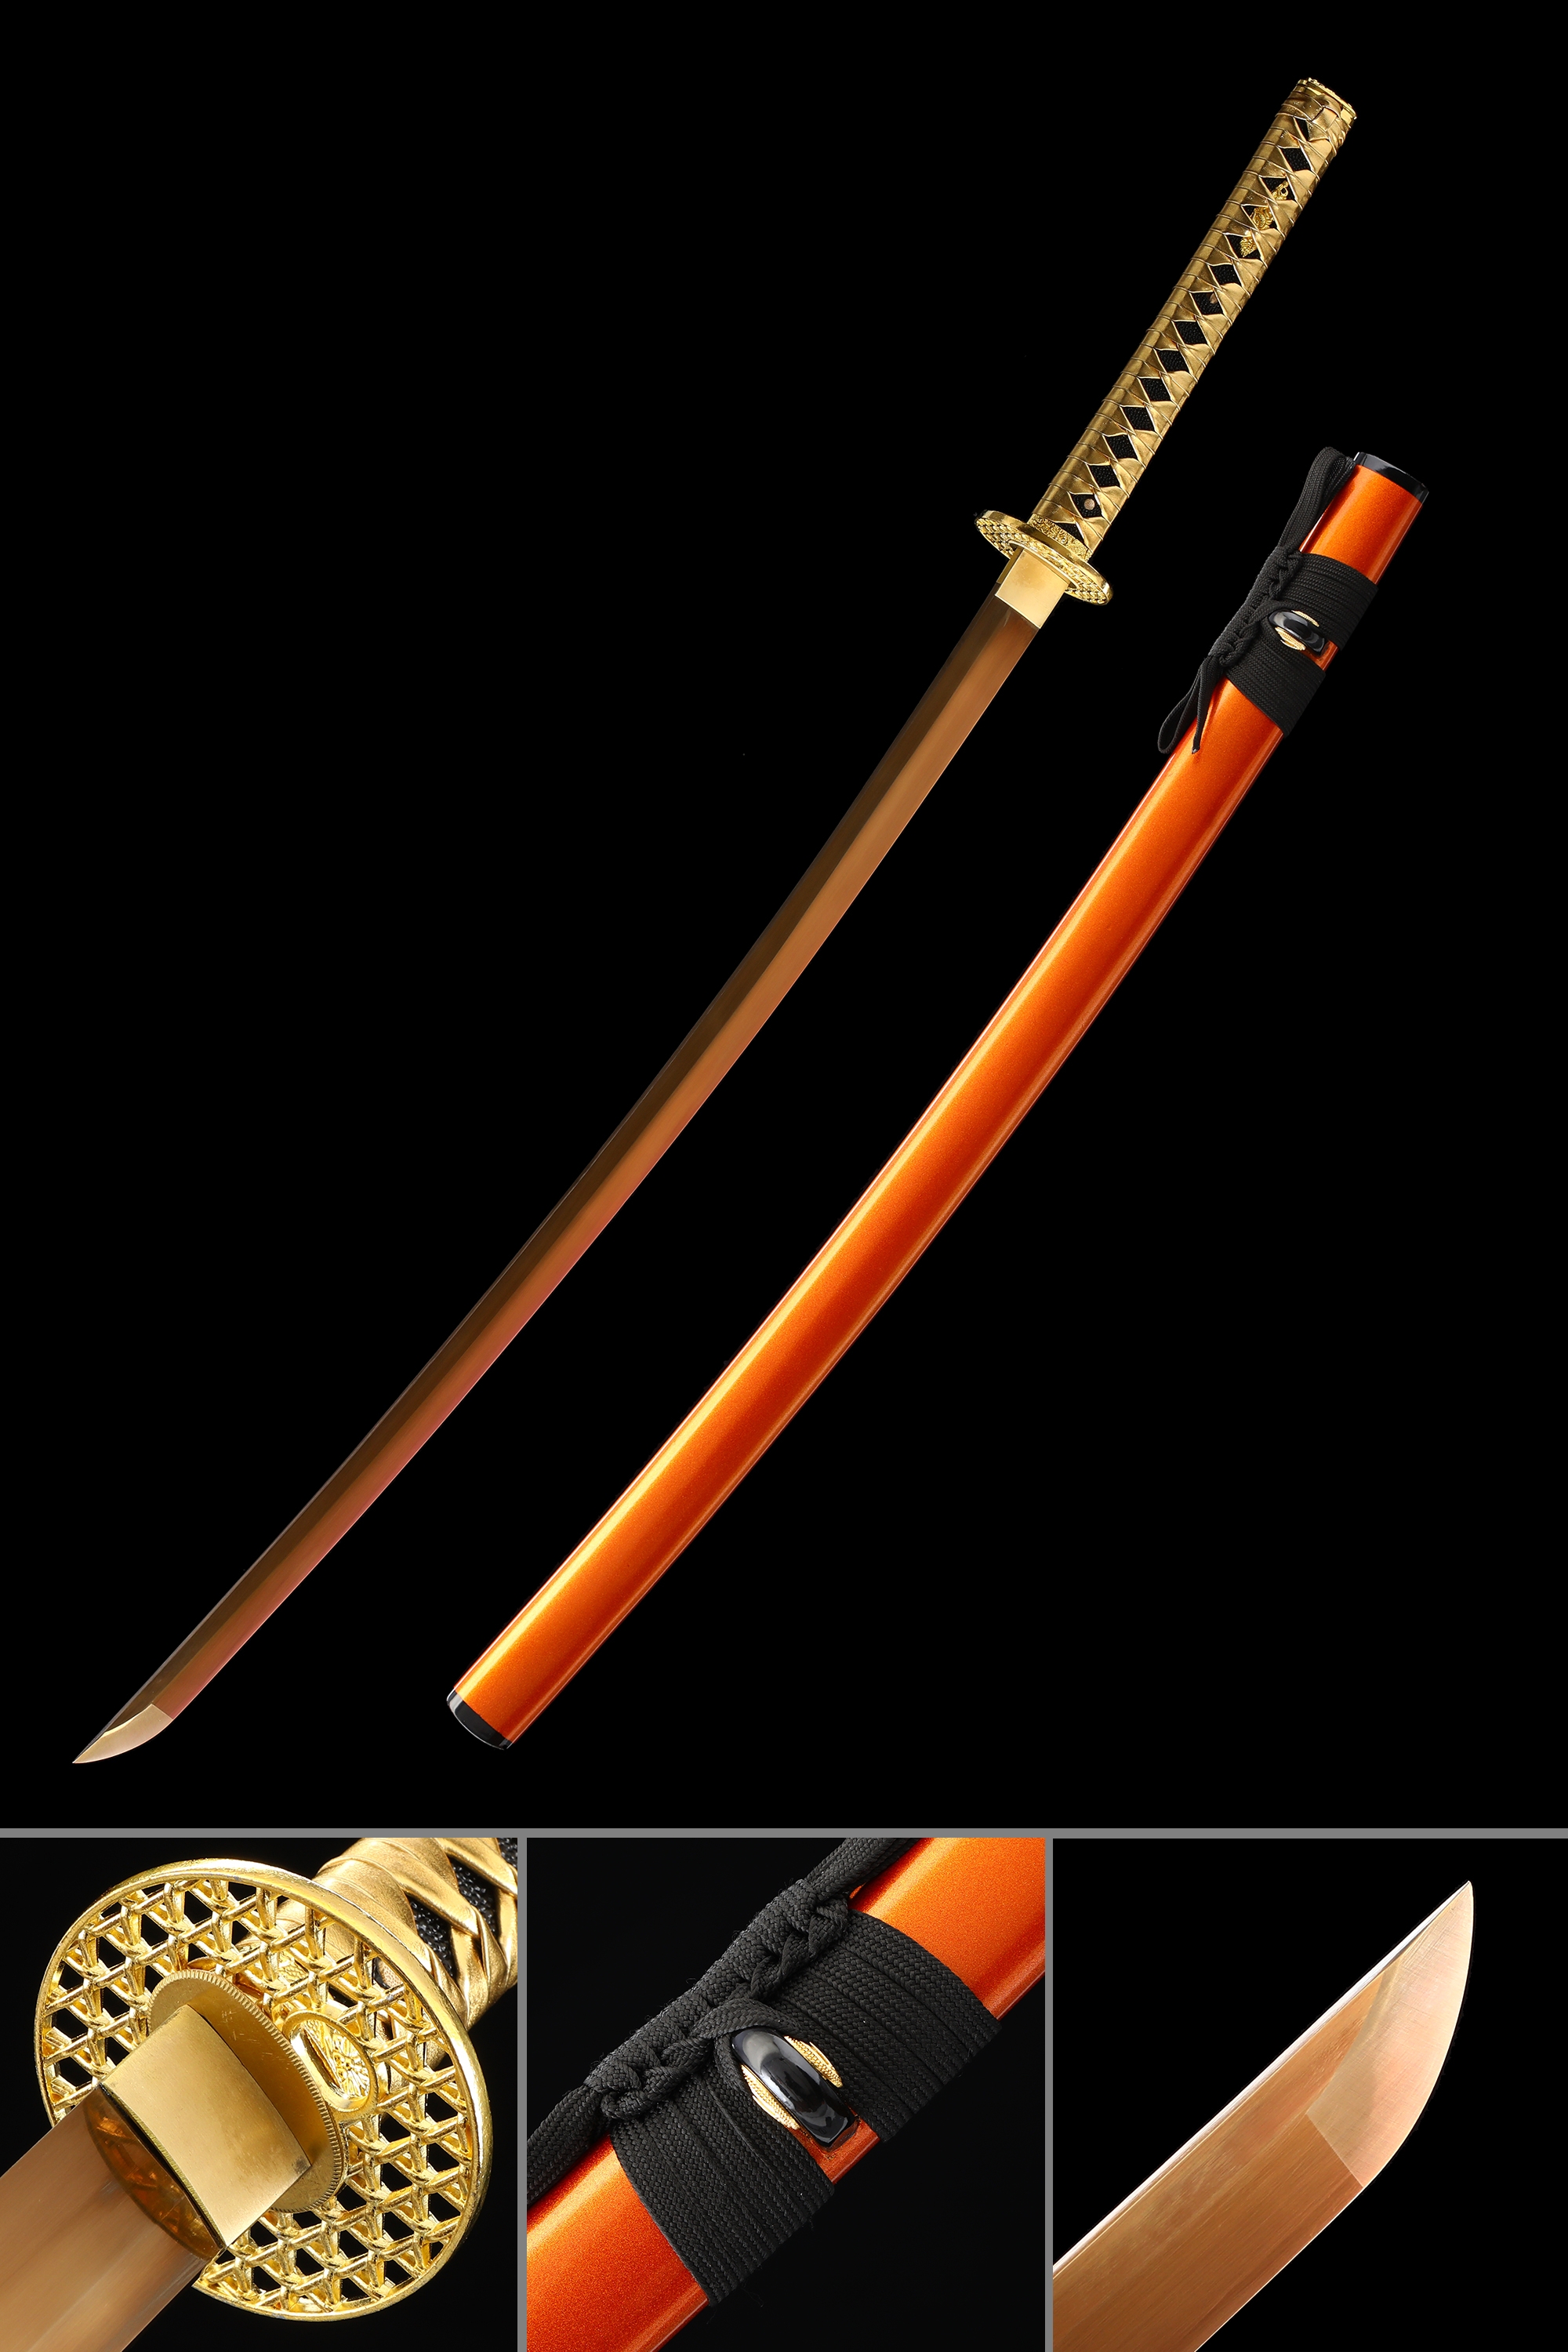 Handmade Japanese Katana Sword 1045 Carbon Steel With Golden Blade And Orange Scabbard